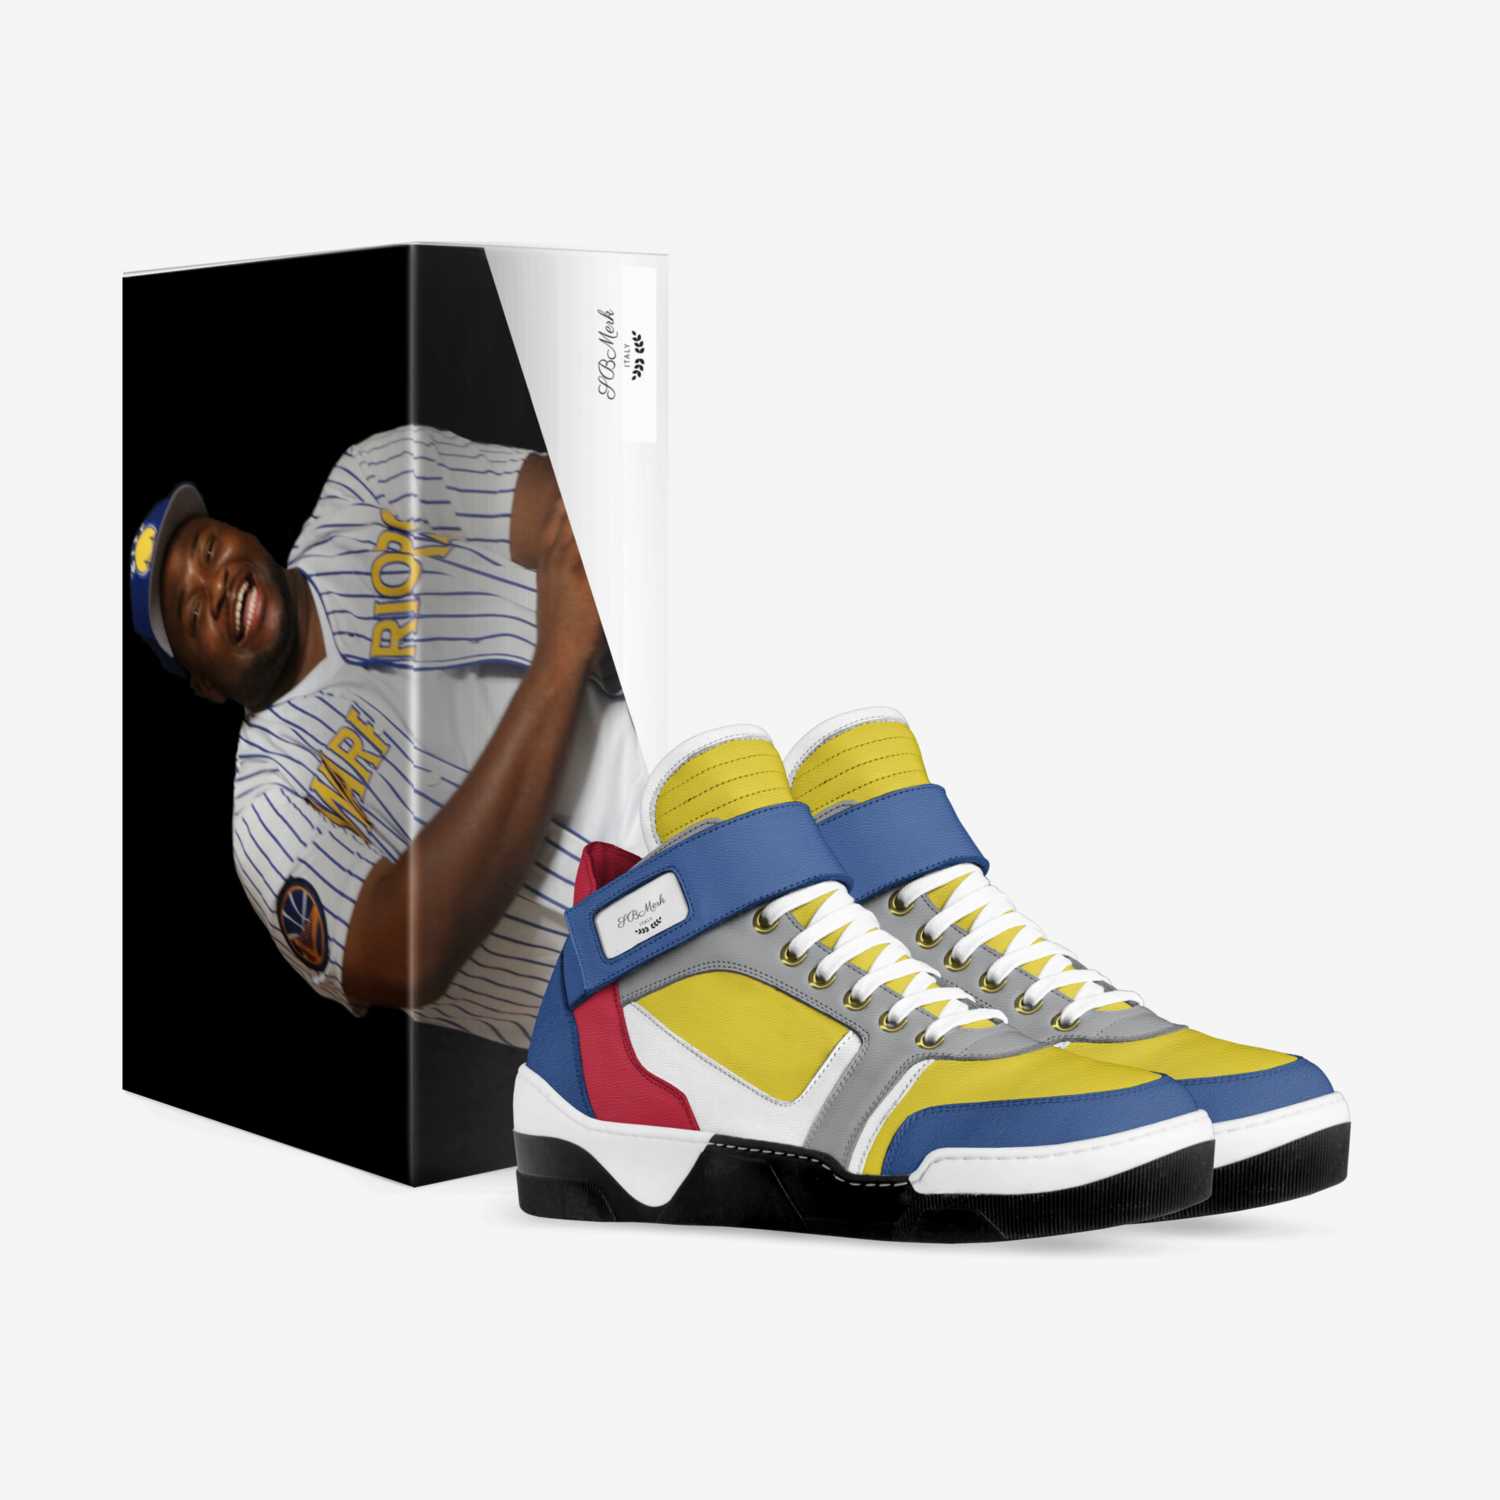 SBMerk custom made in Italy shoes by Demond Henderson | Box view